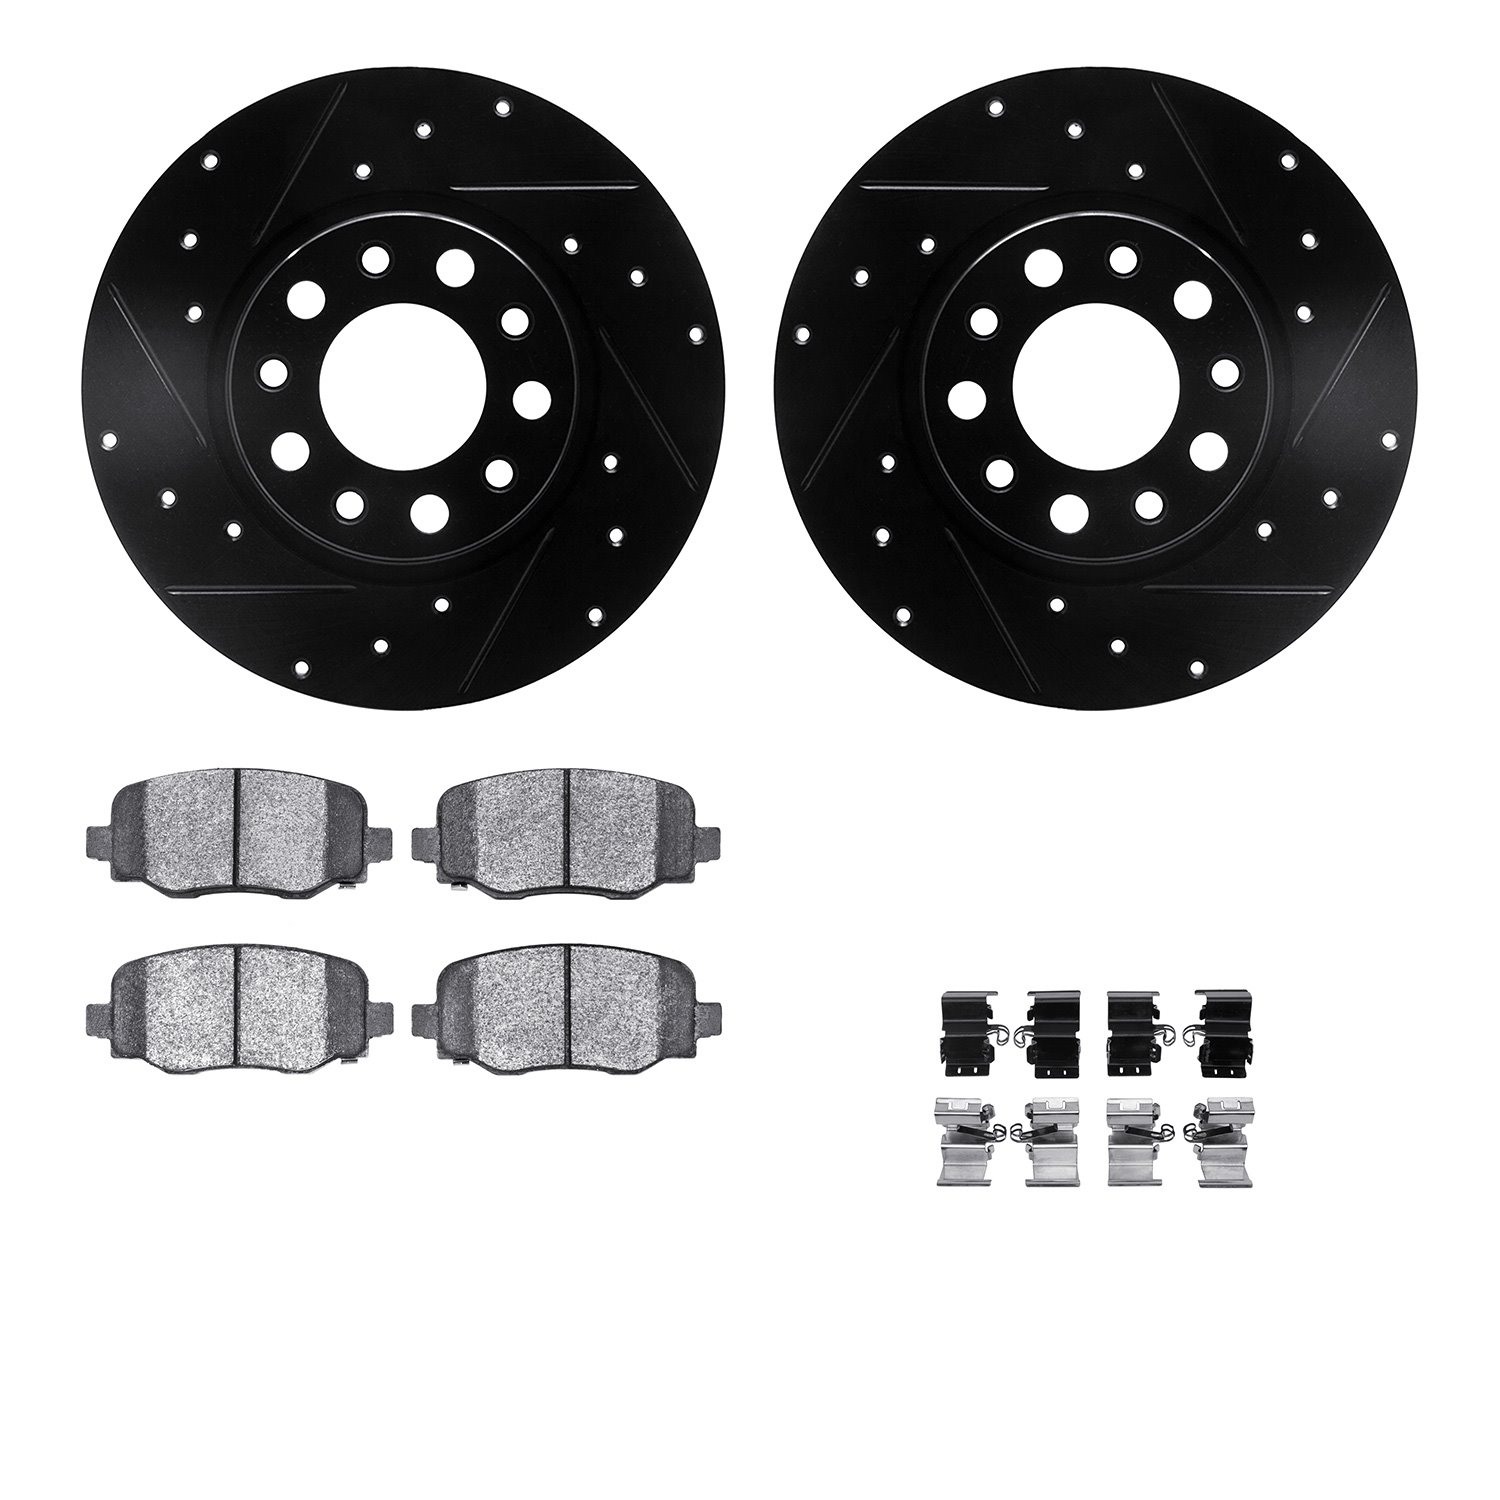 8412-42014 Drilled/Slotted Brake Rotors with Ultimate-Duty Brake Pads Kit & Hardware [Black], Fits Select Mopar, Position: Rear